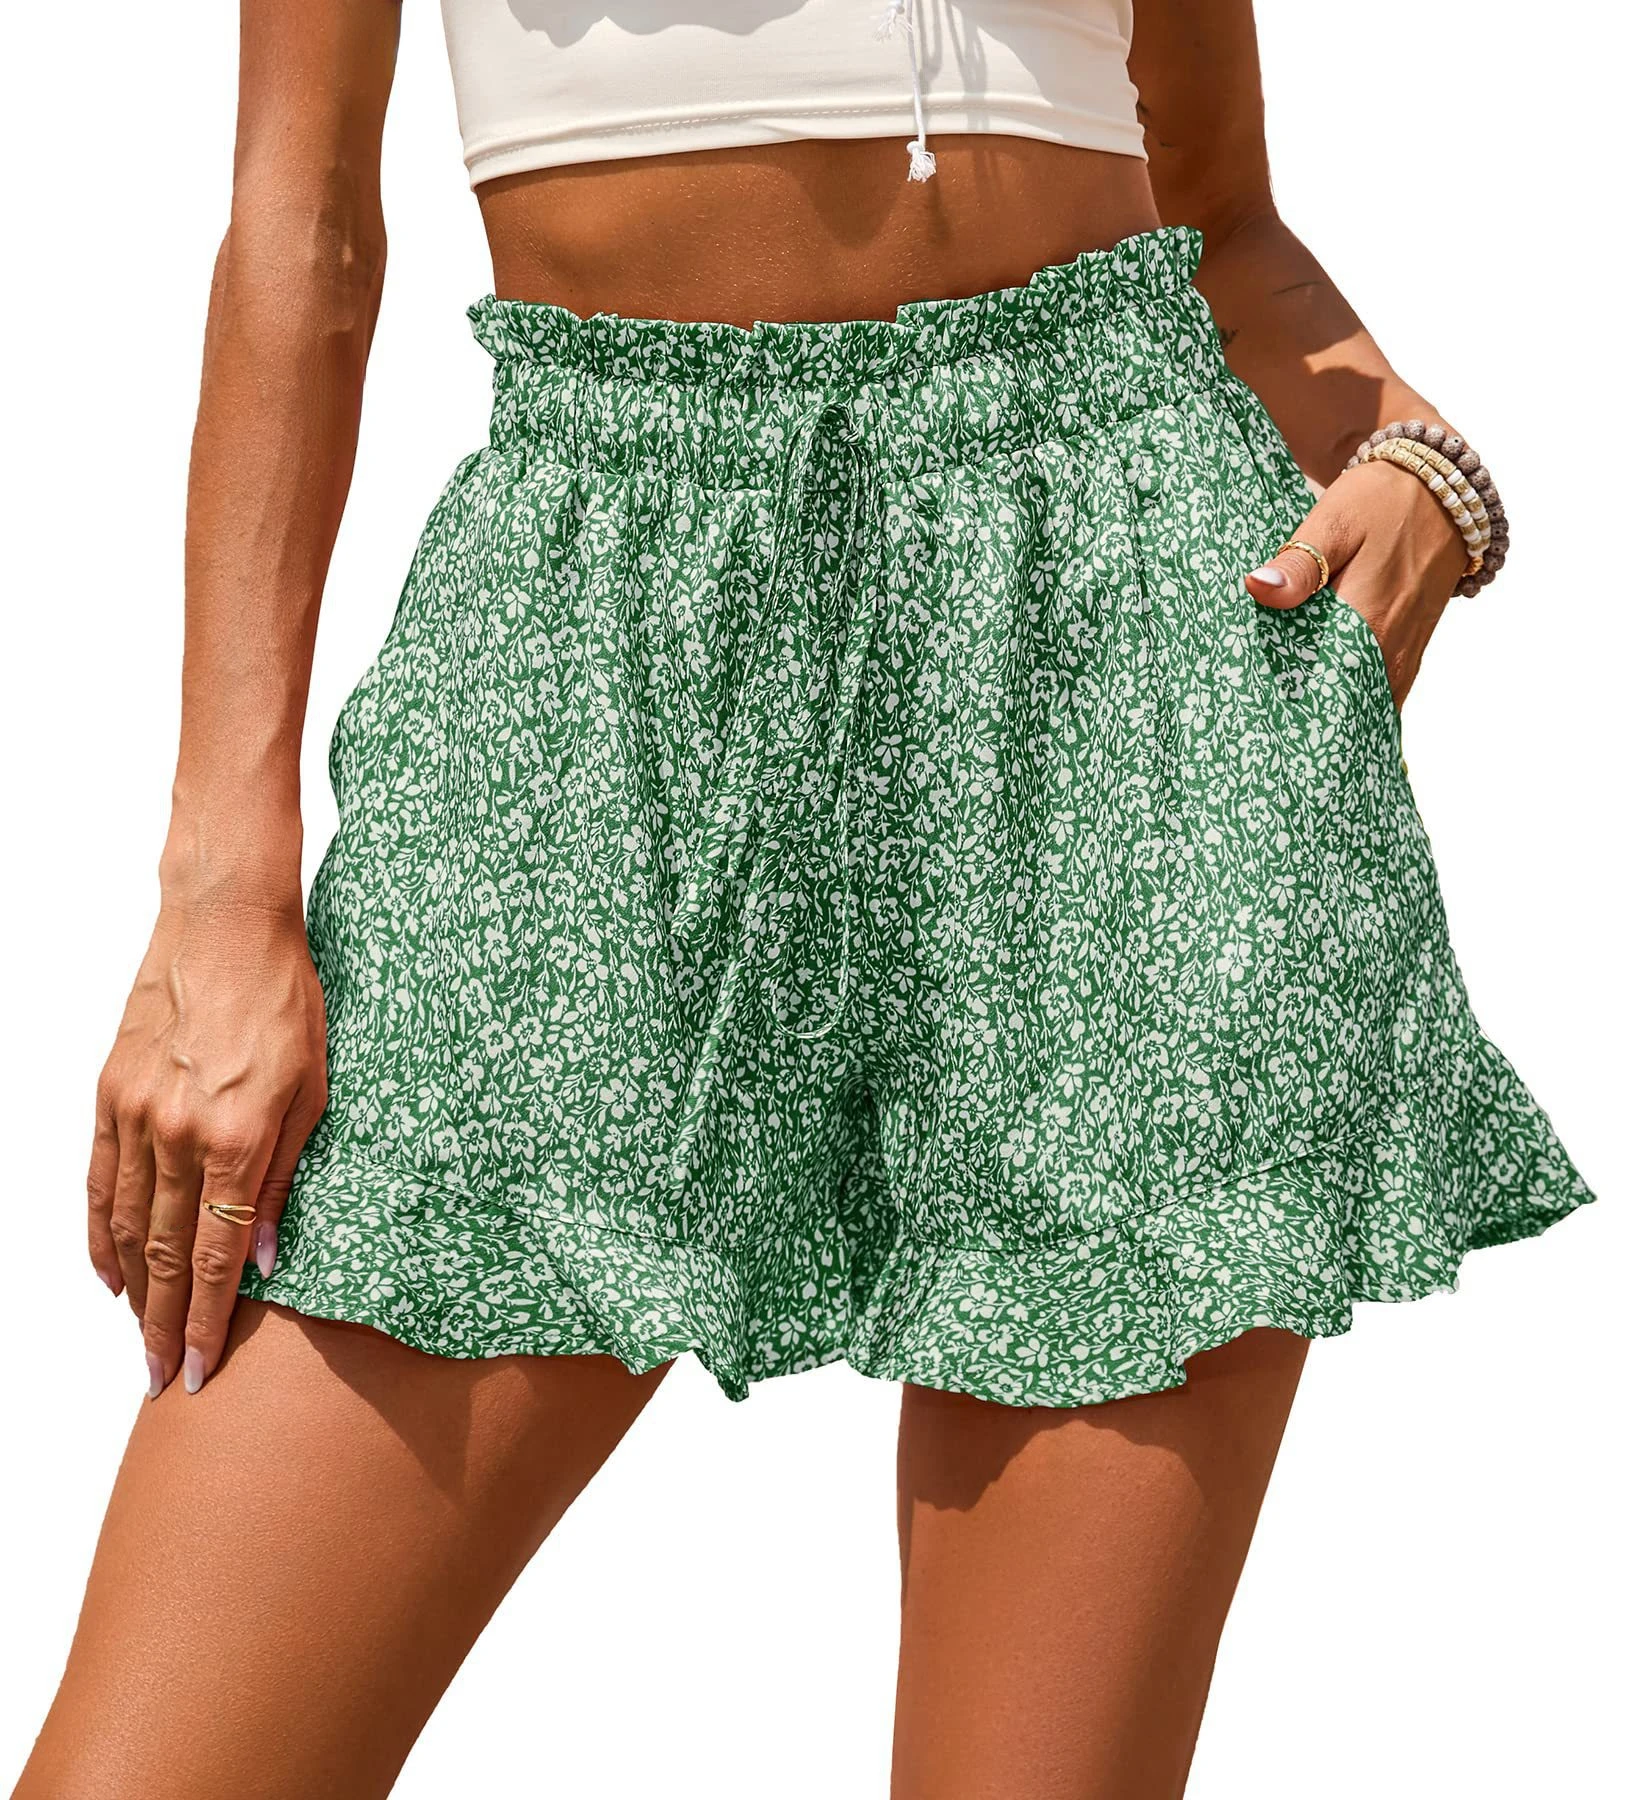 2022 Summer Women Shorts Stretchy Floral Printing Girls Shorts Pants Outdoor Casual Female Shorts Pants